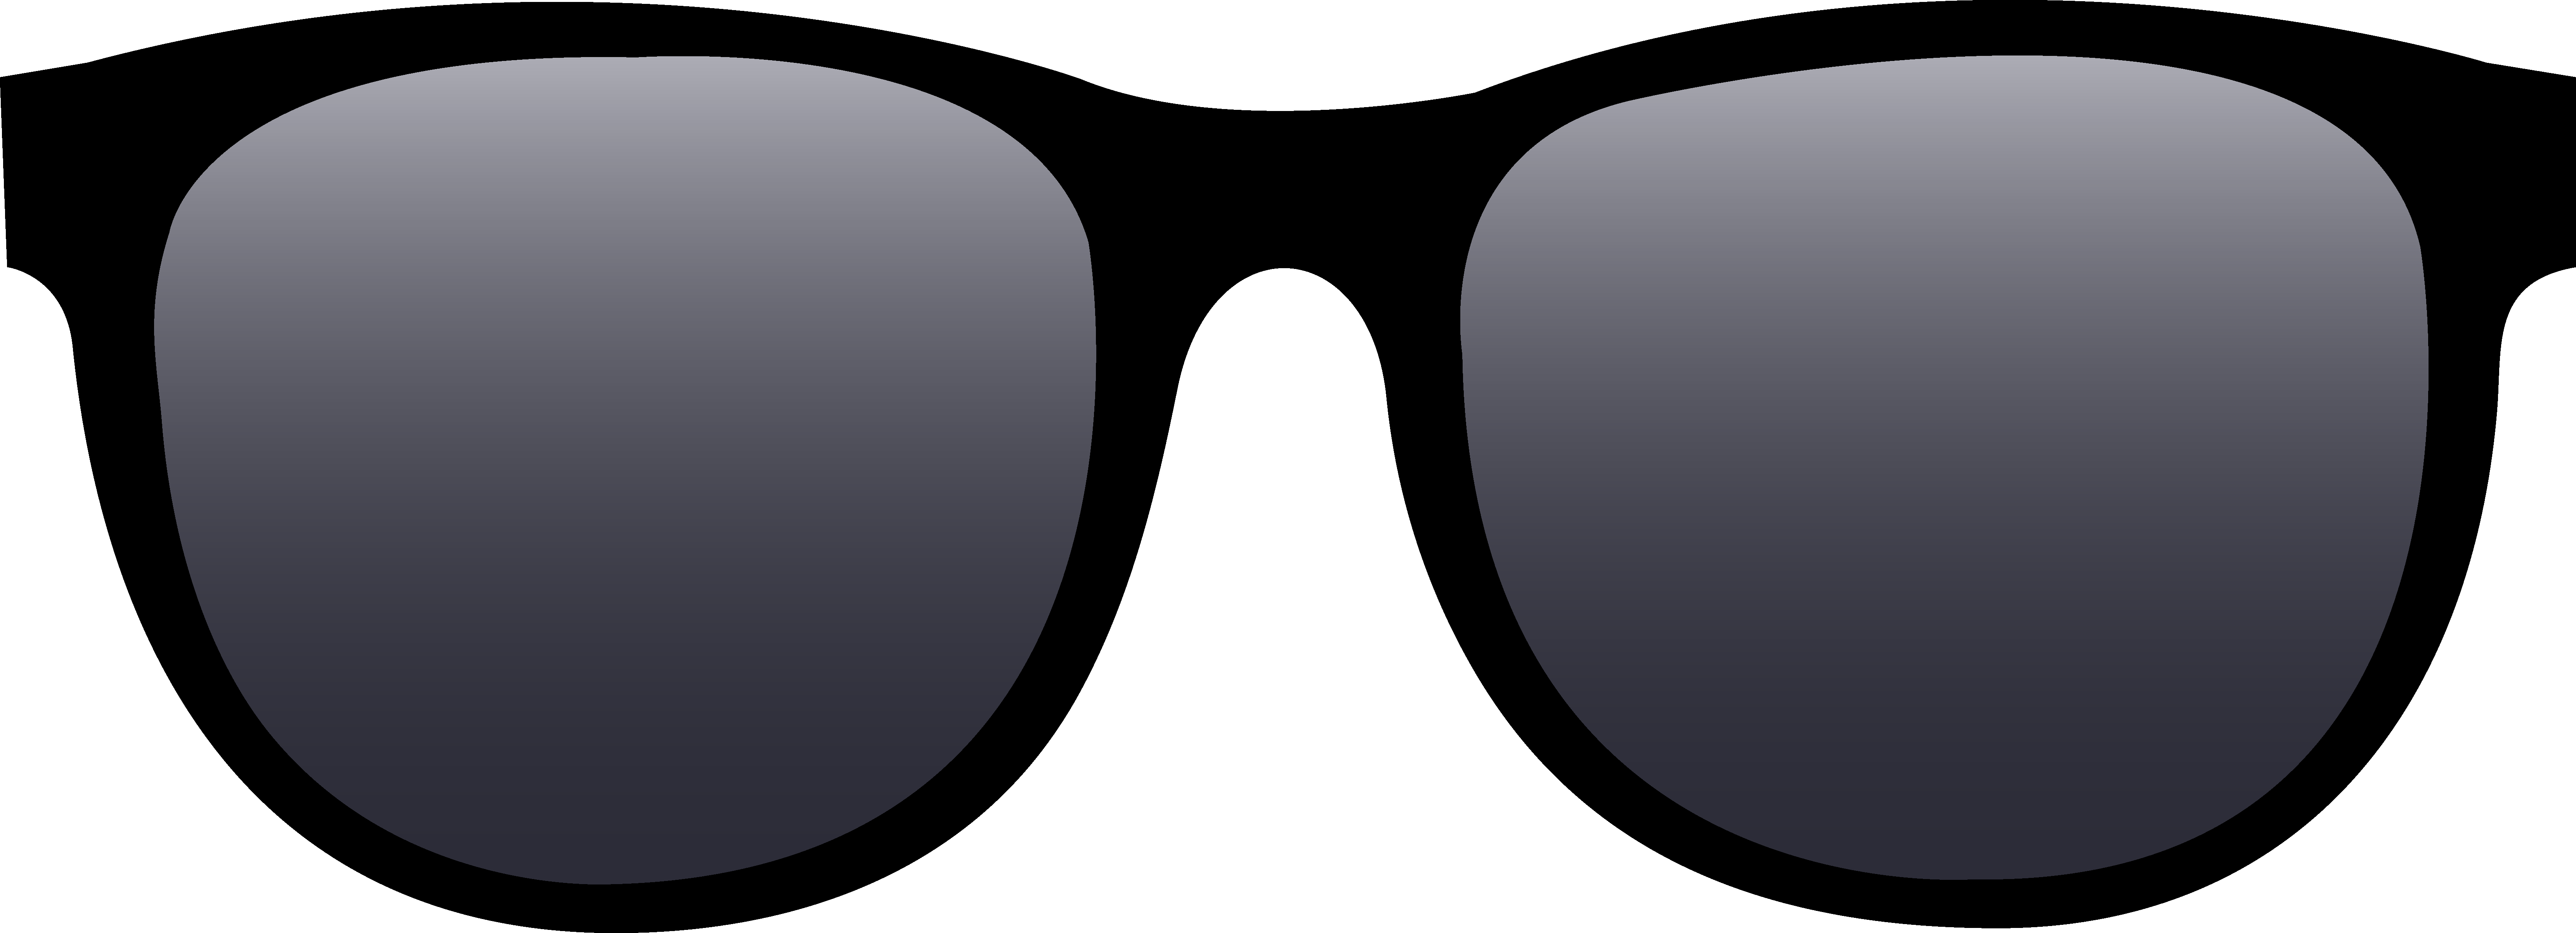 Animated sunglasses clipart 